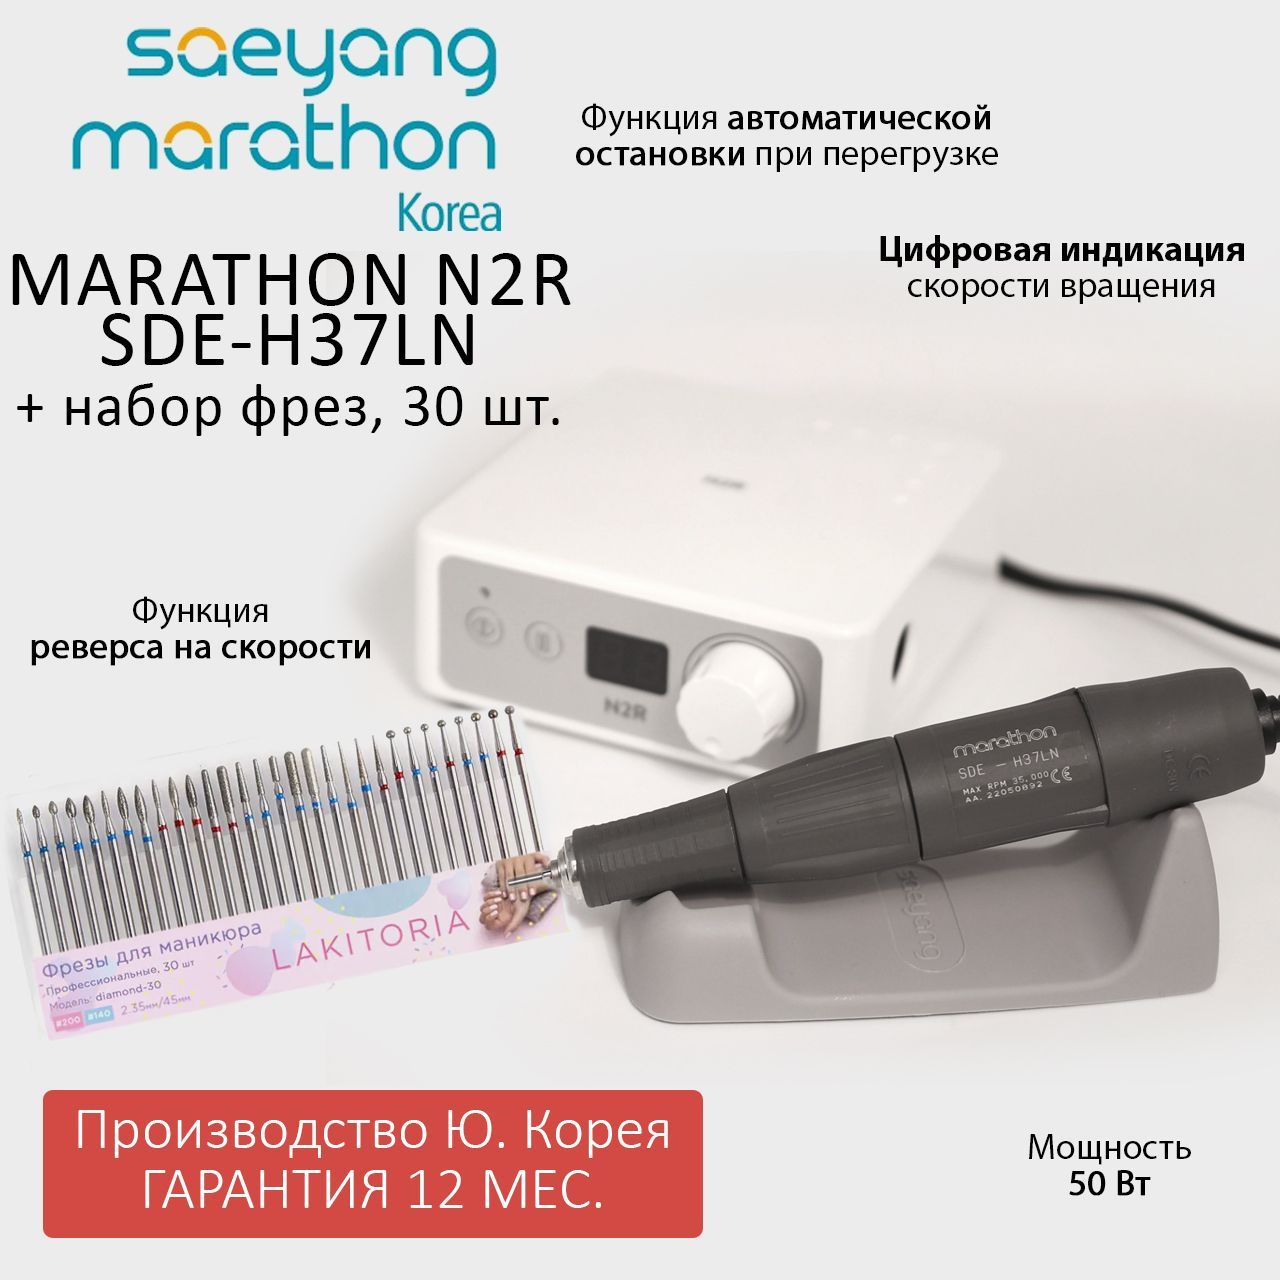 Аппарат для маникюра Marathon N2R SDE-H37LN без педали и набор фрез для маникюра 30шт